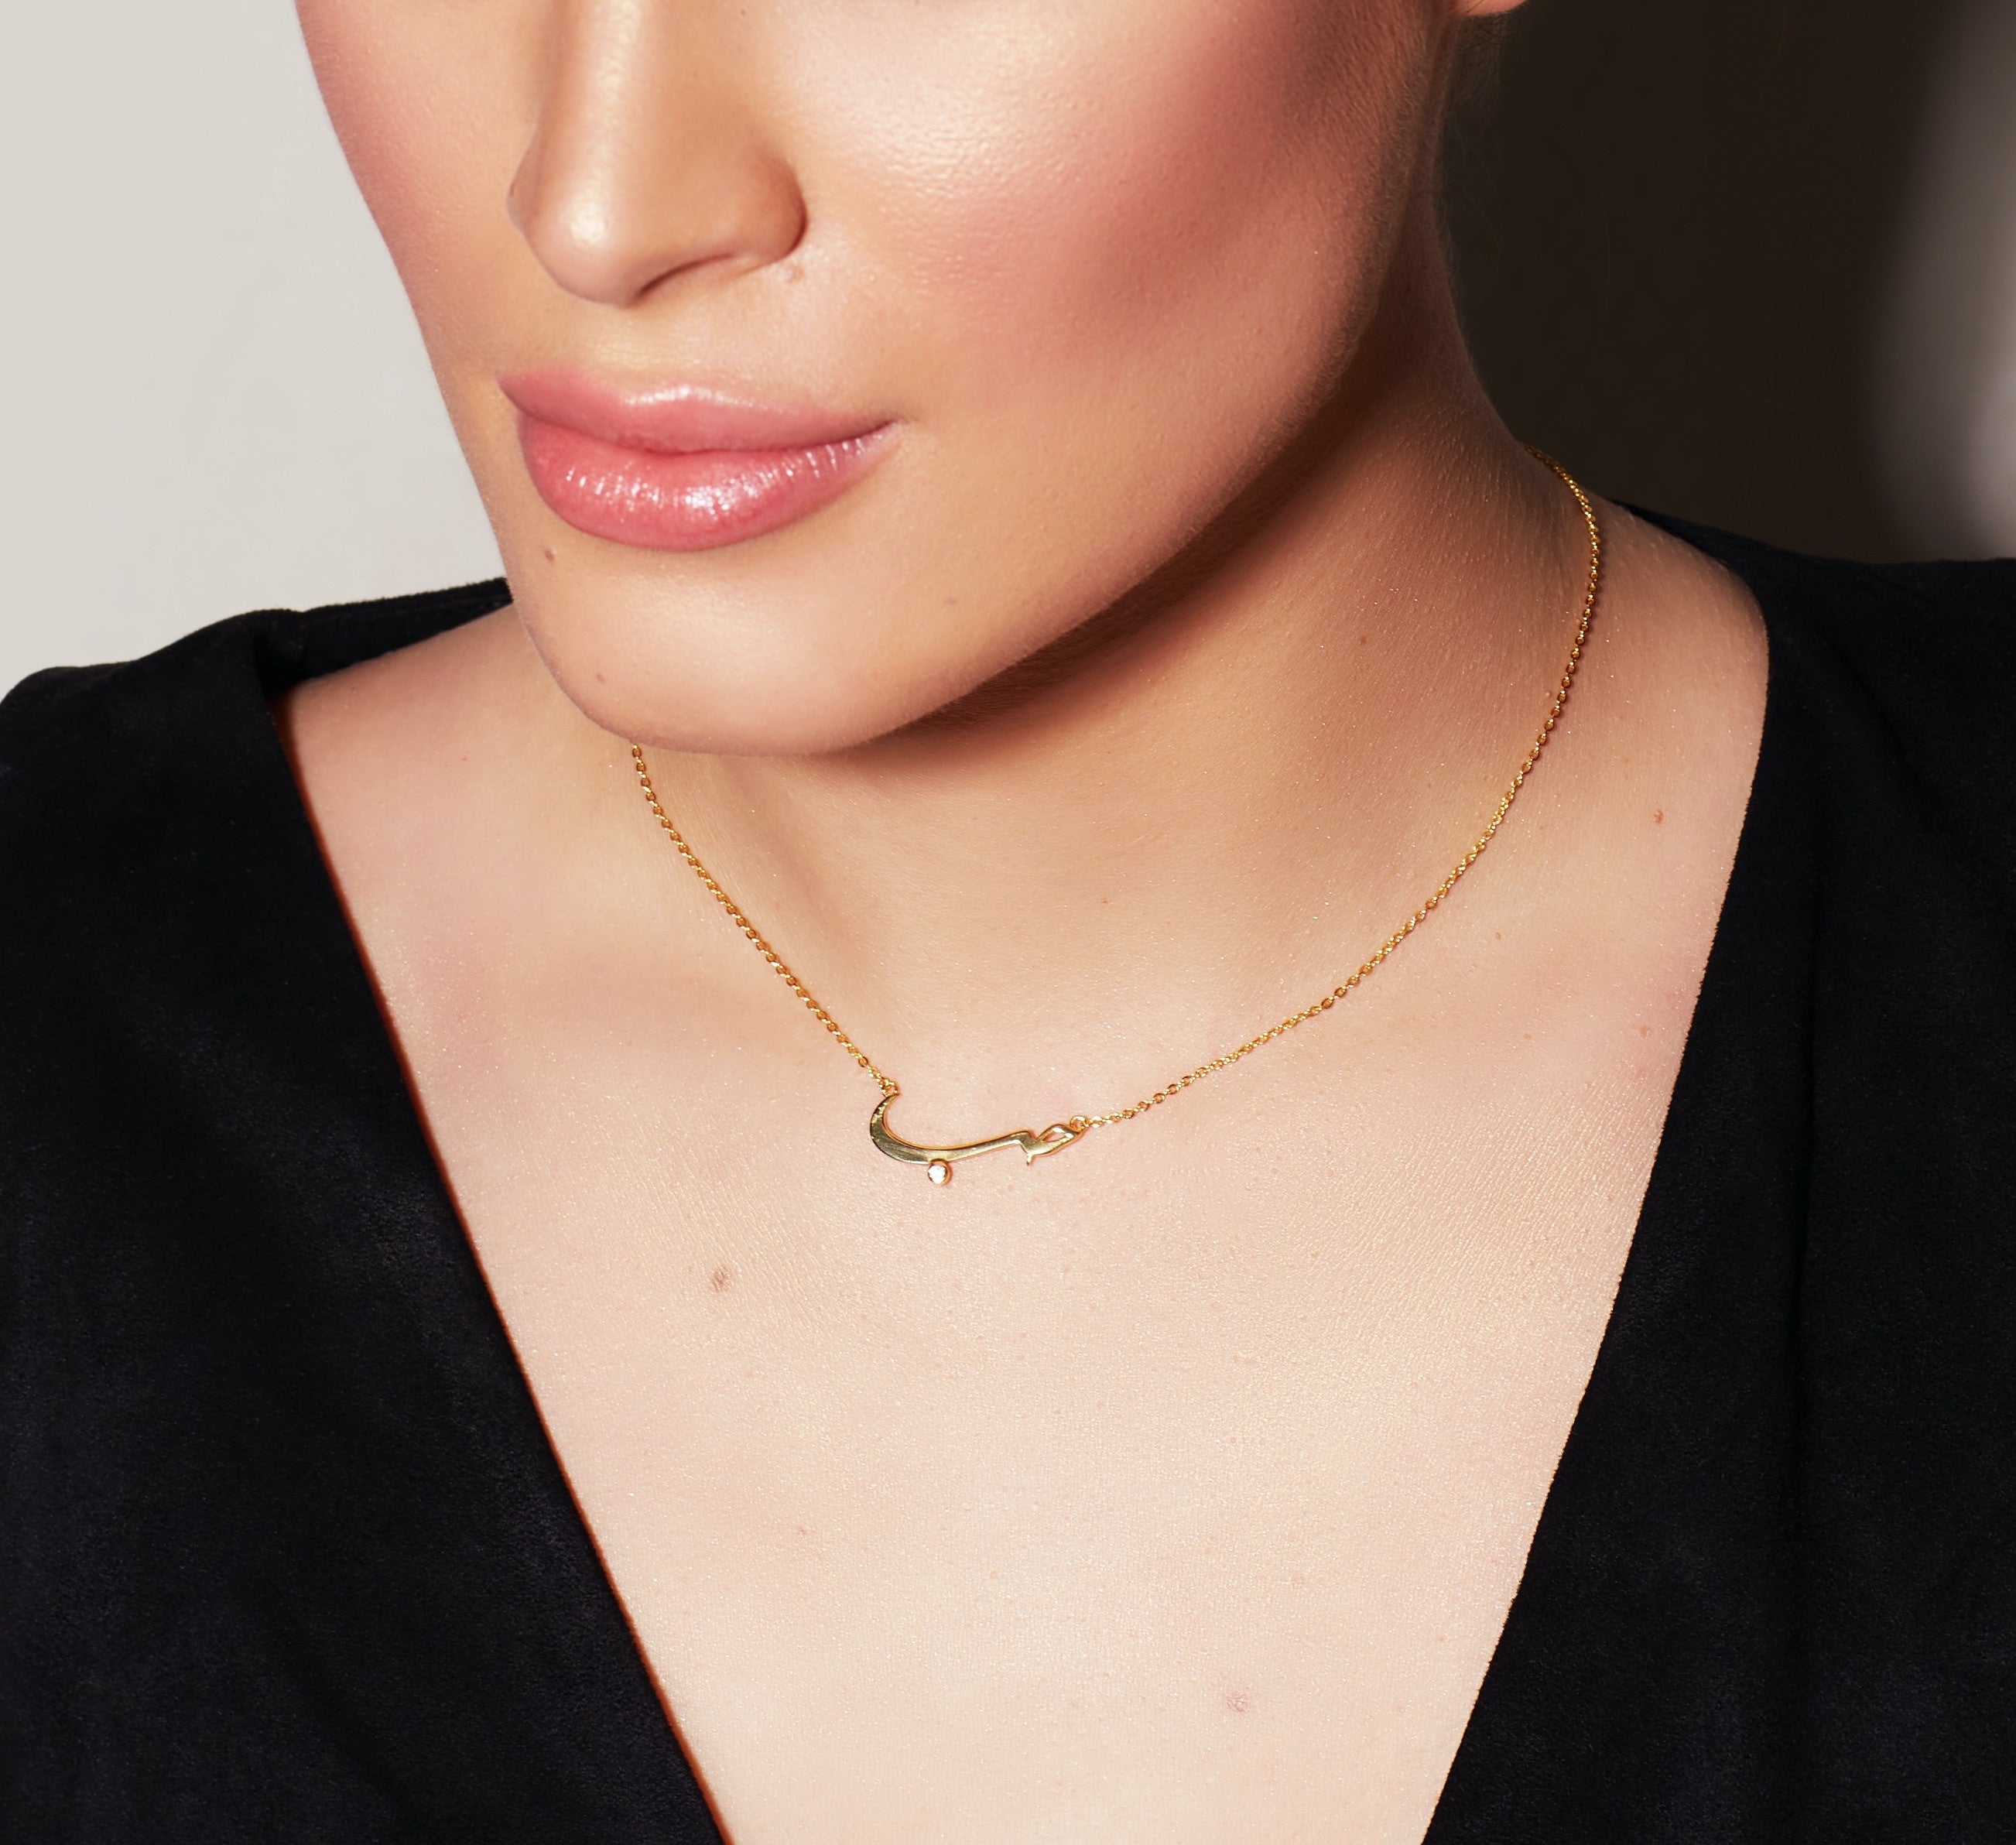 Hub Love arabic pendant necklace gold 